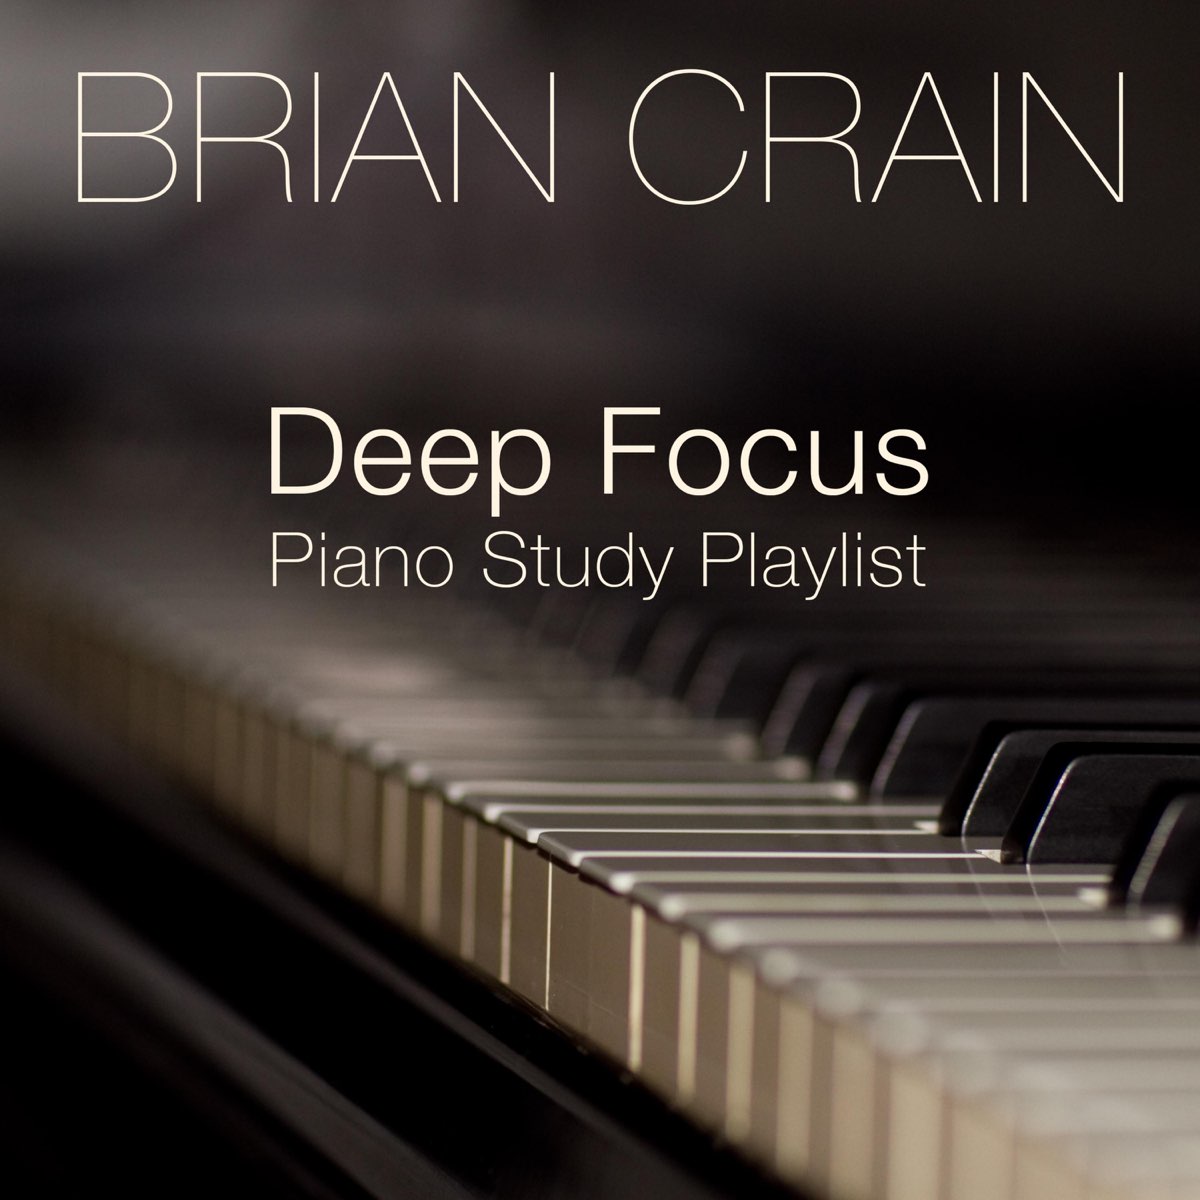 Deep Focus Piano Study Playlist by Brian Crain on Apple Music